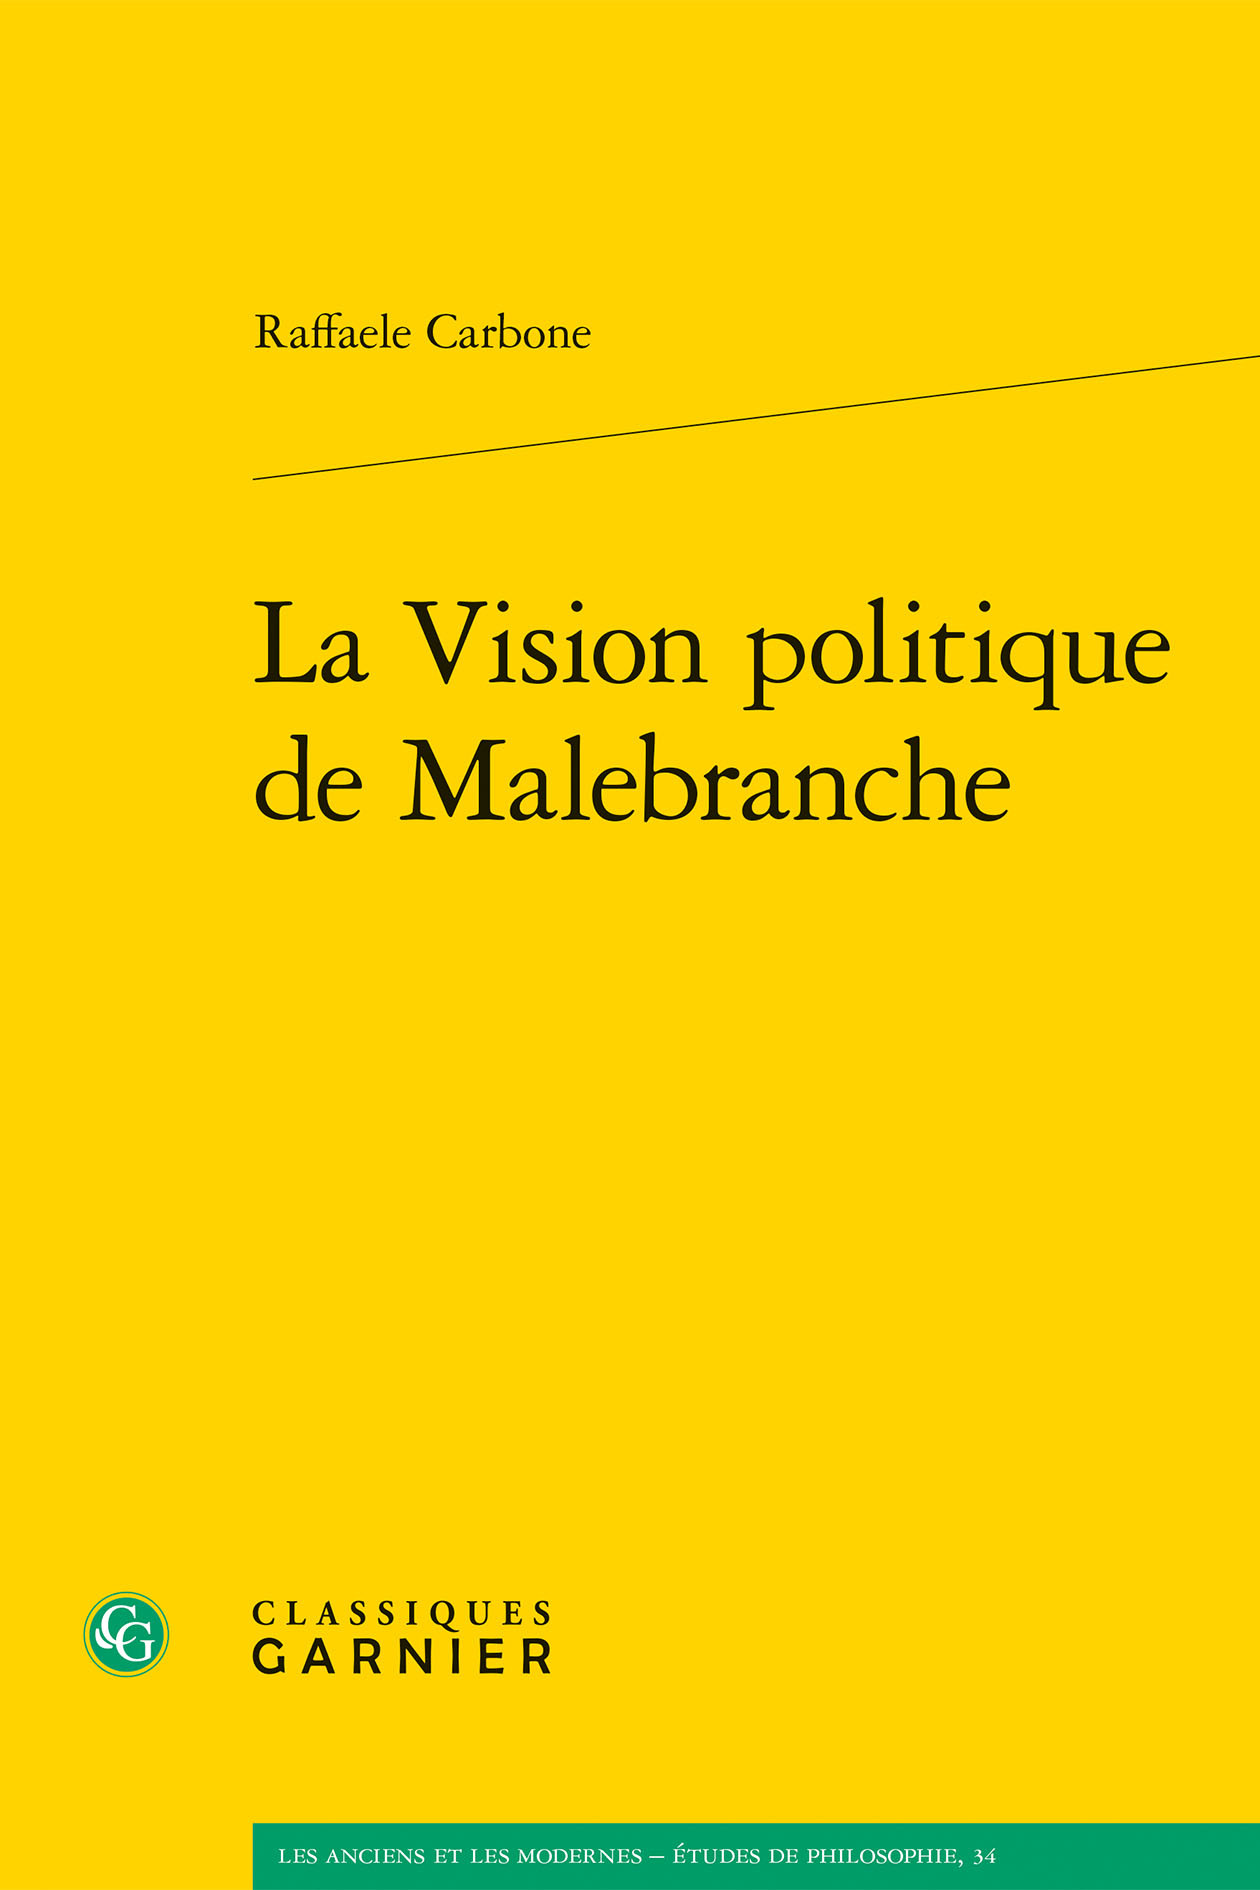 La Vision politique de Malebranche (9782406073499-front-cover)